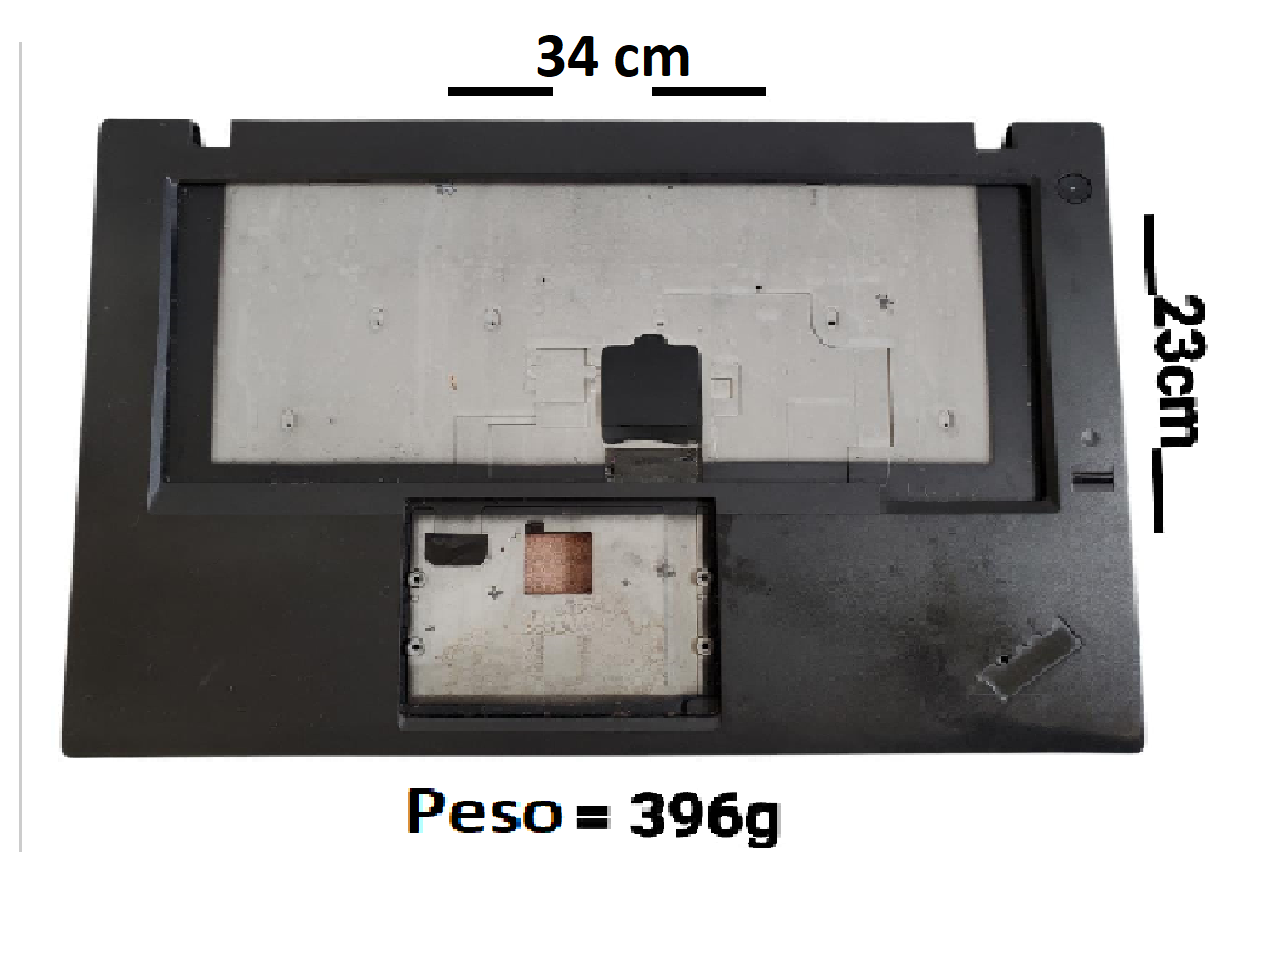 Carcasa Base Inferior y Palmrest de Laptop Lenovo T440 (Producto usado)